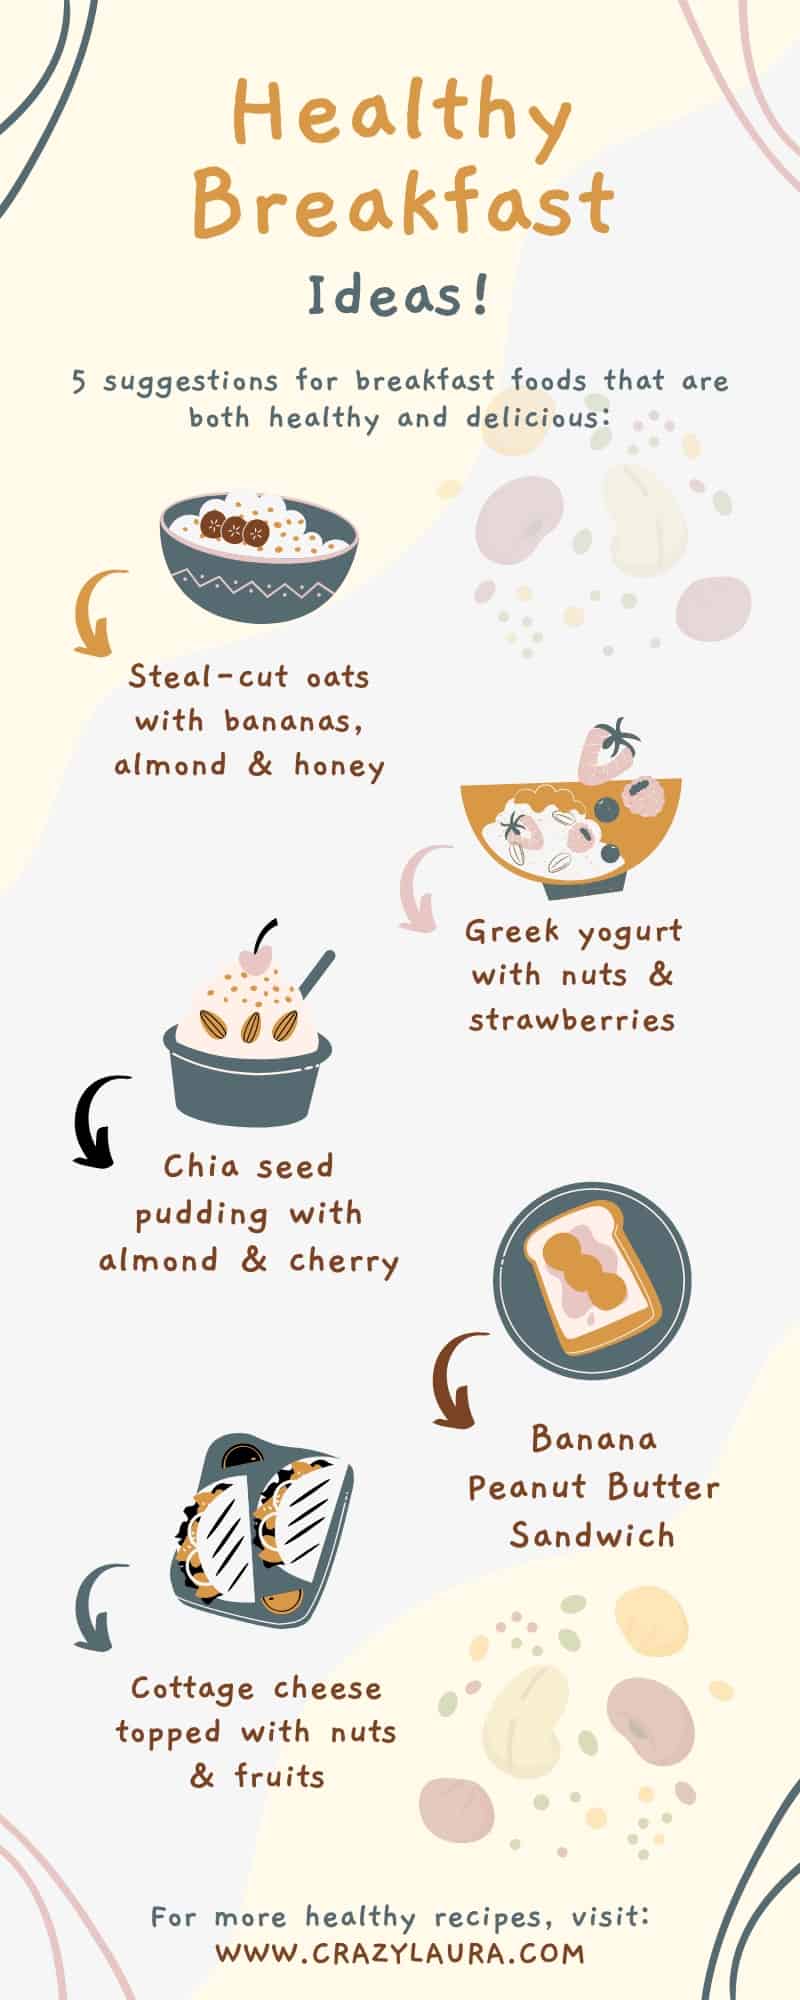 Healthy Breakfast Ideas Infographic - CrazyLaura